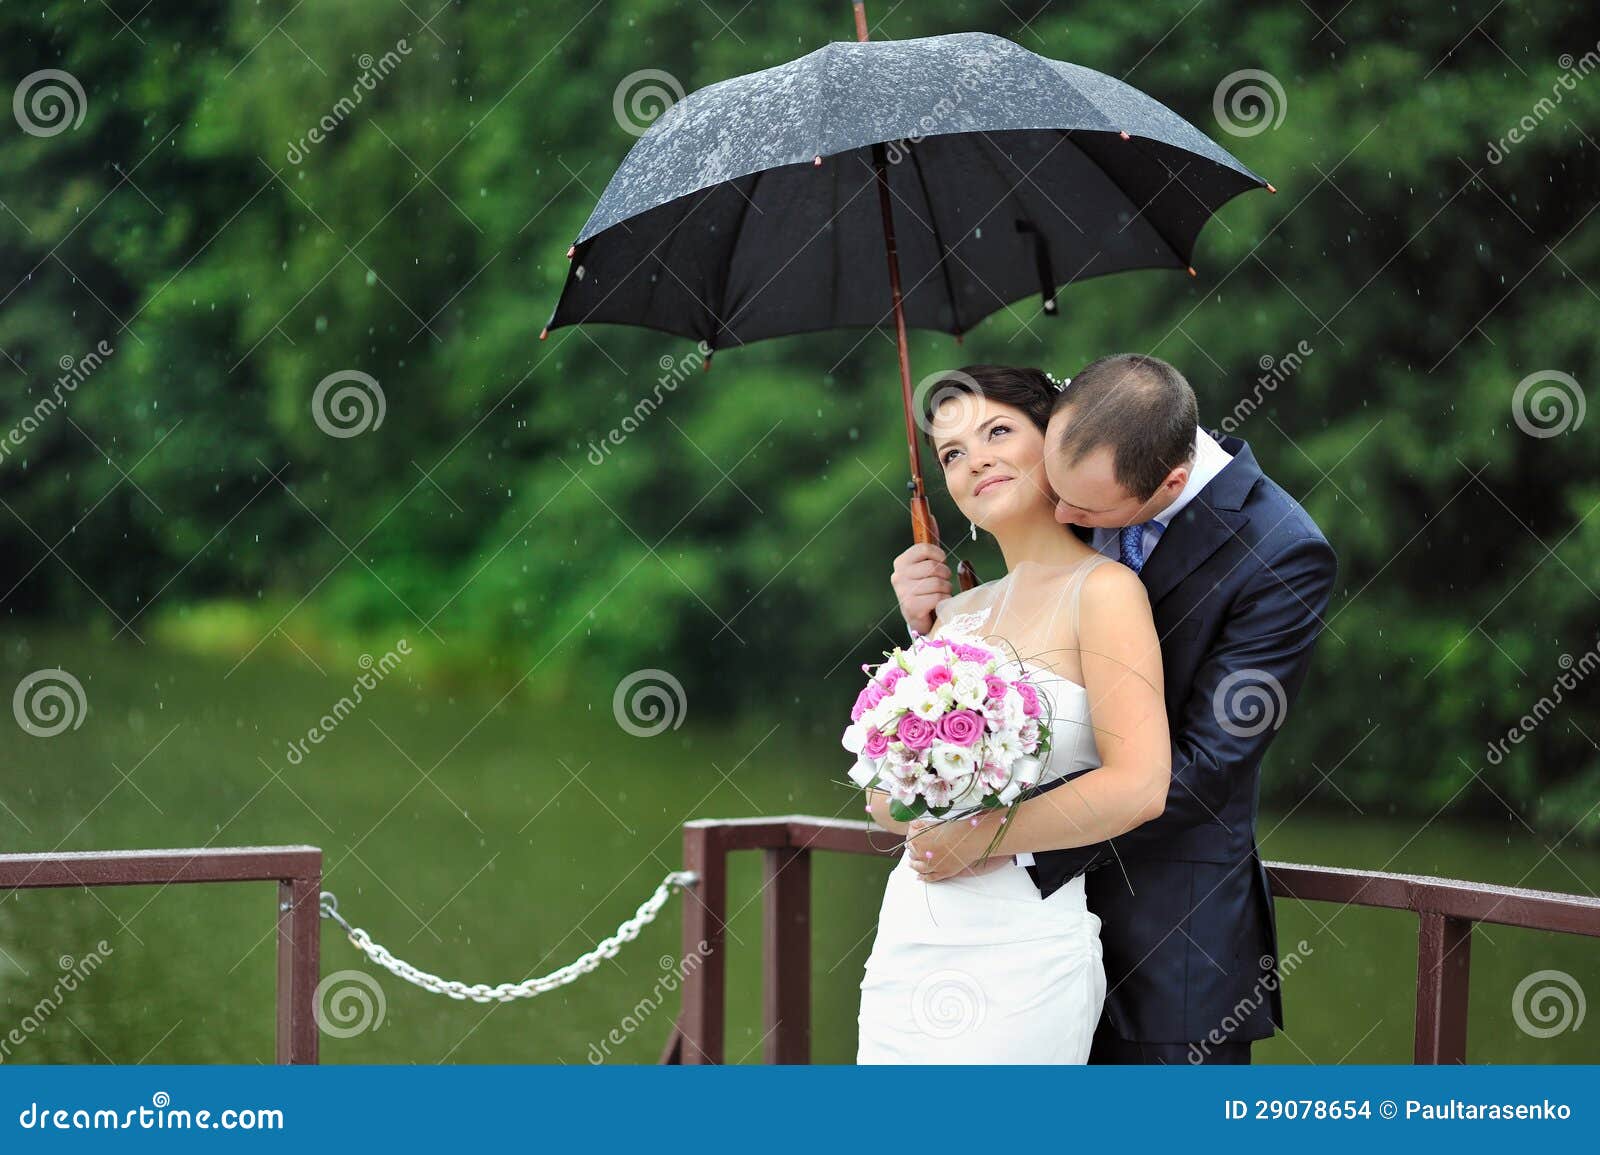 Dating rainy